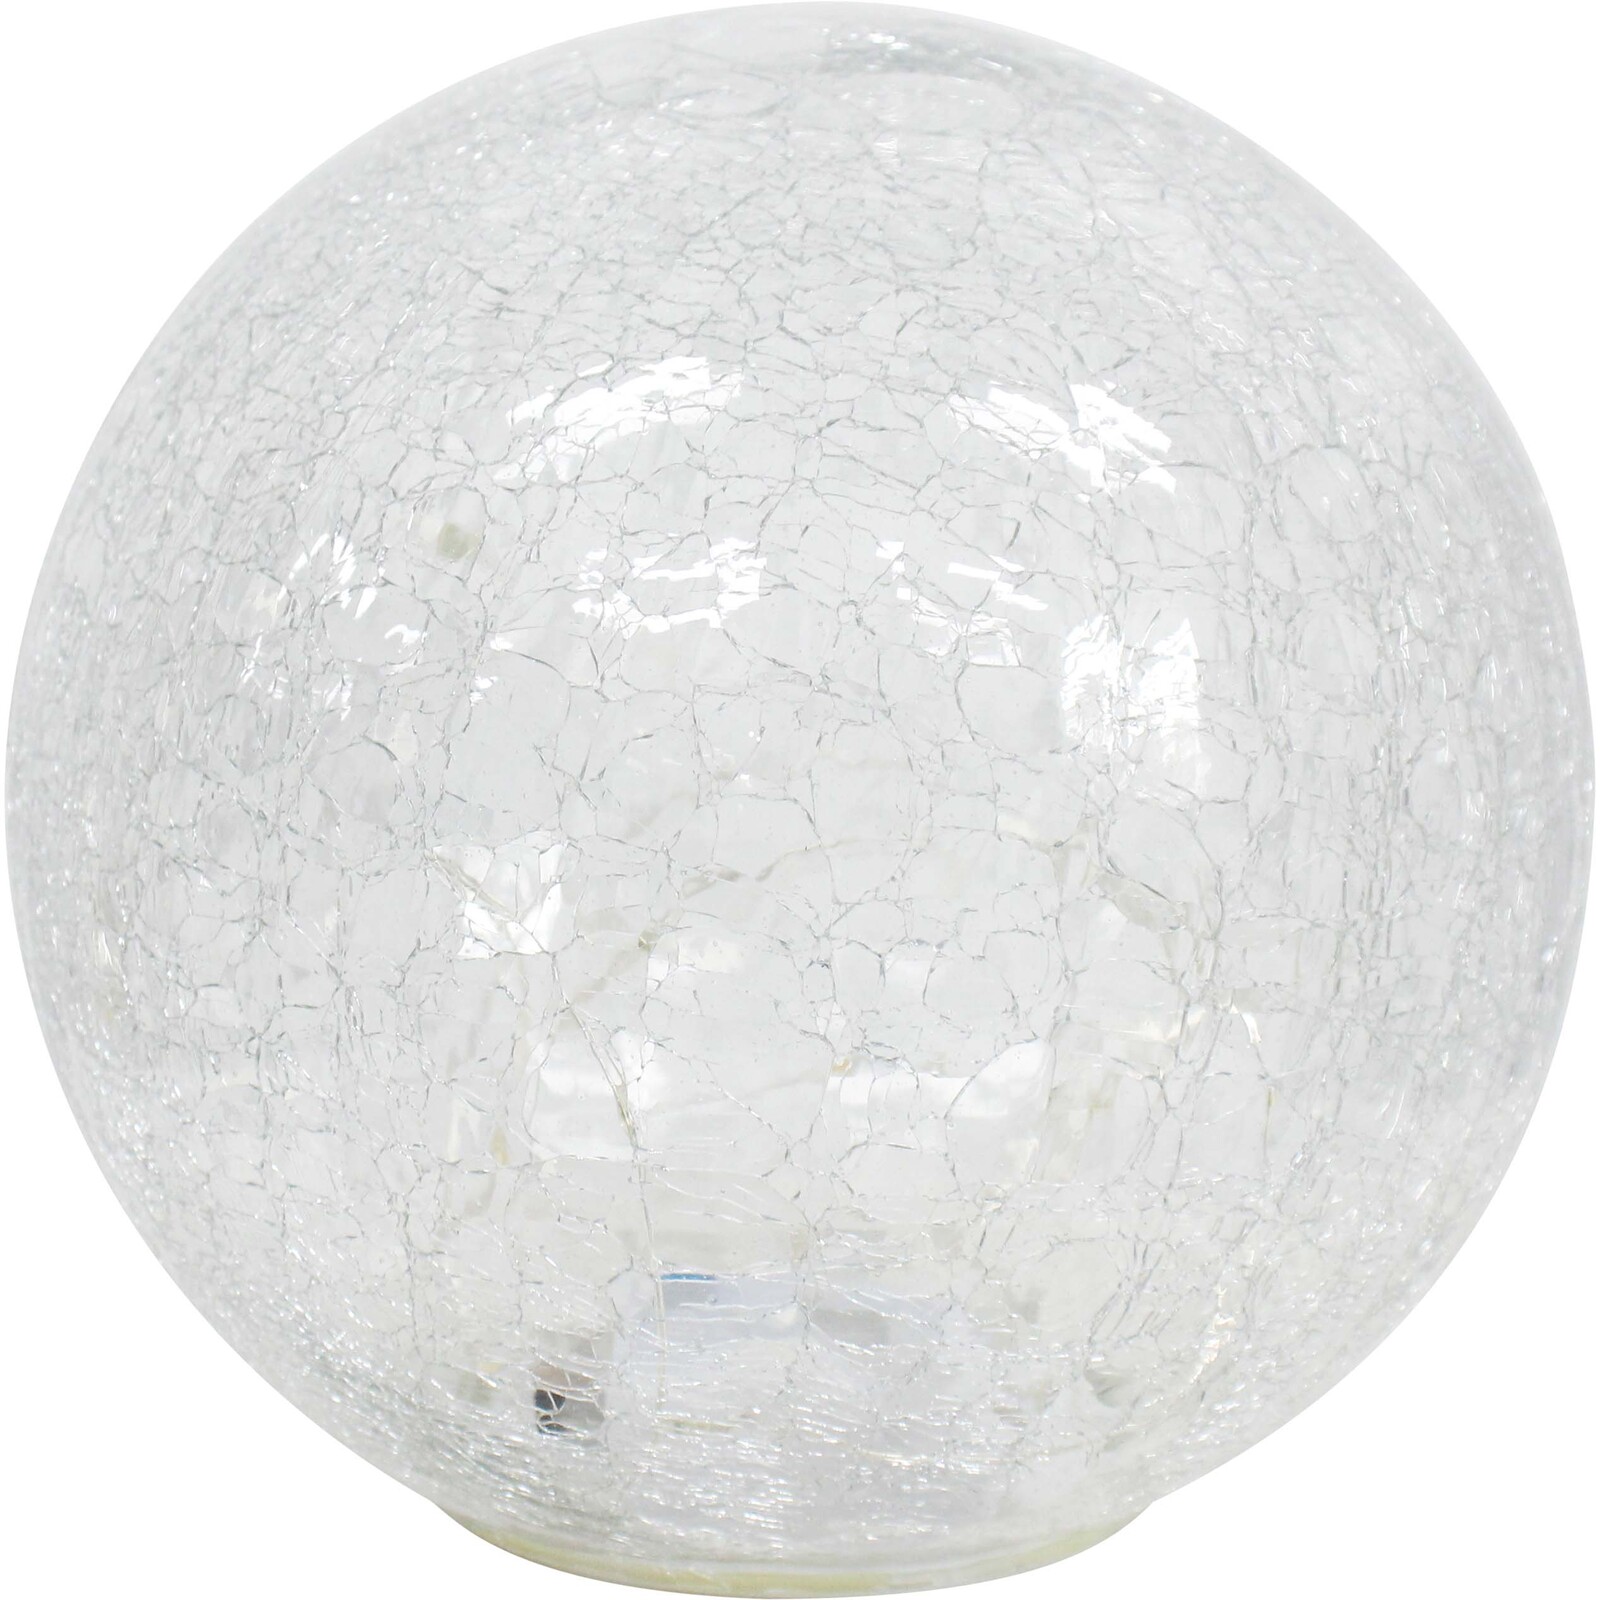 Glass Ball Cracked Clear Lrg